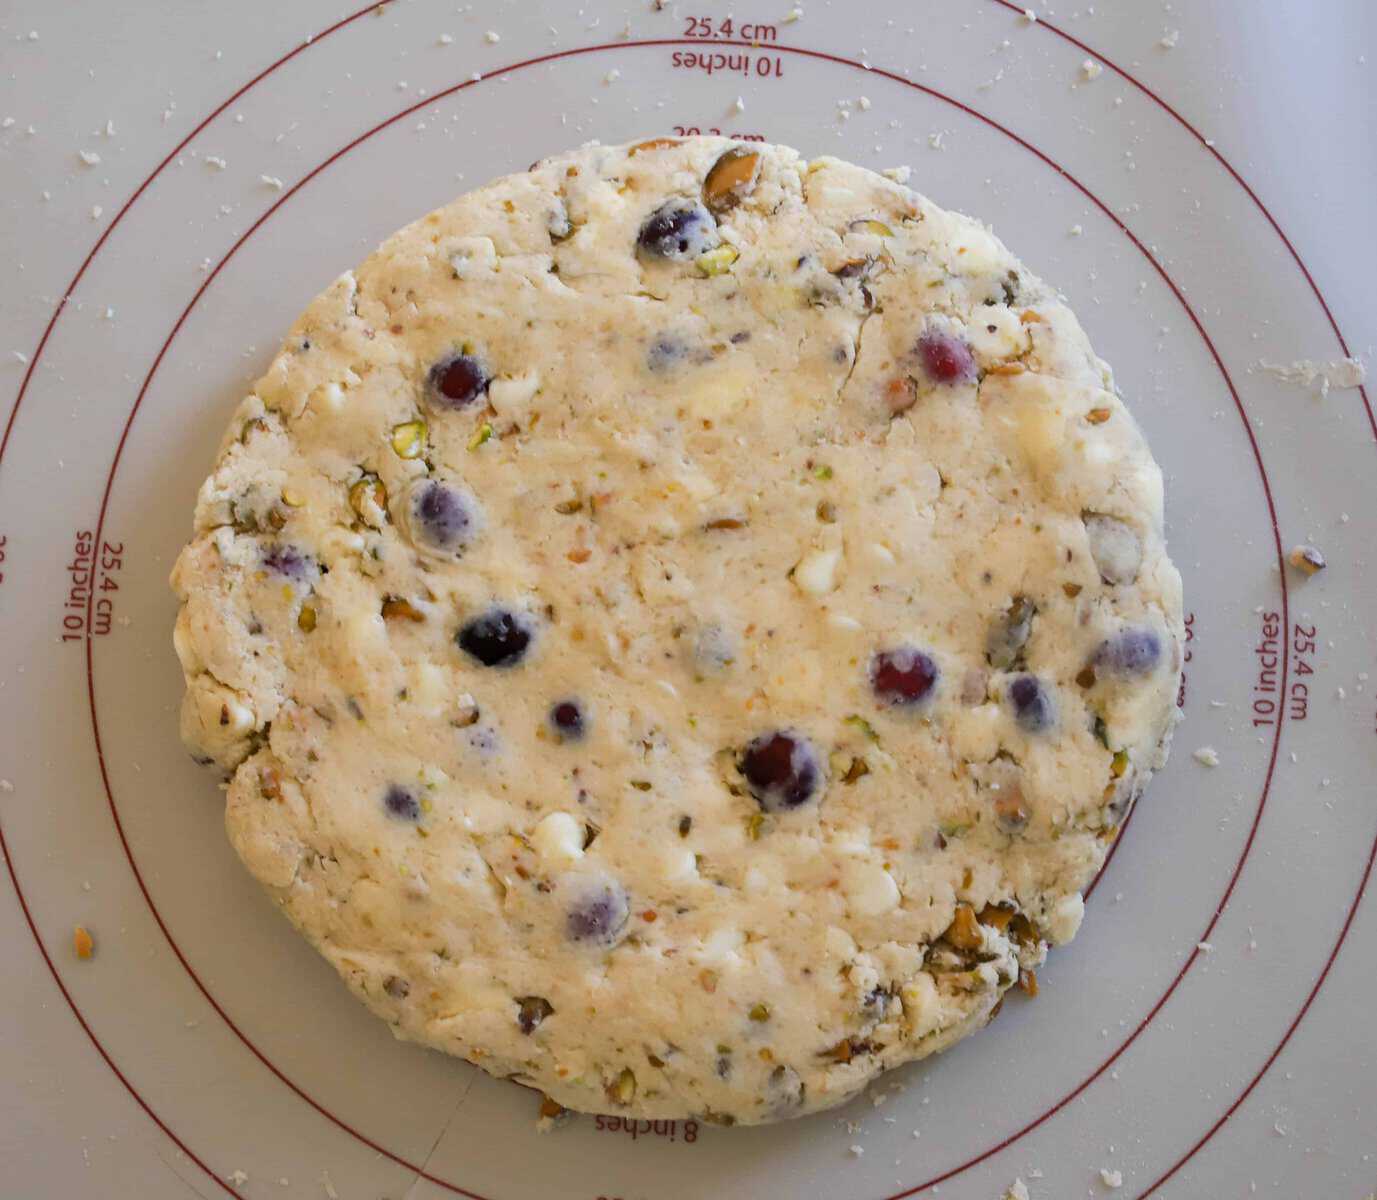 pistachio scone dough shaped into a circle